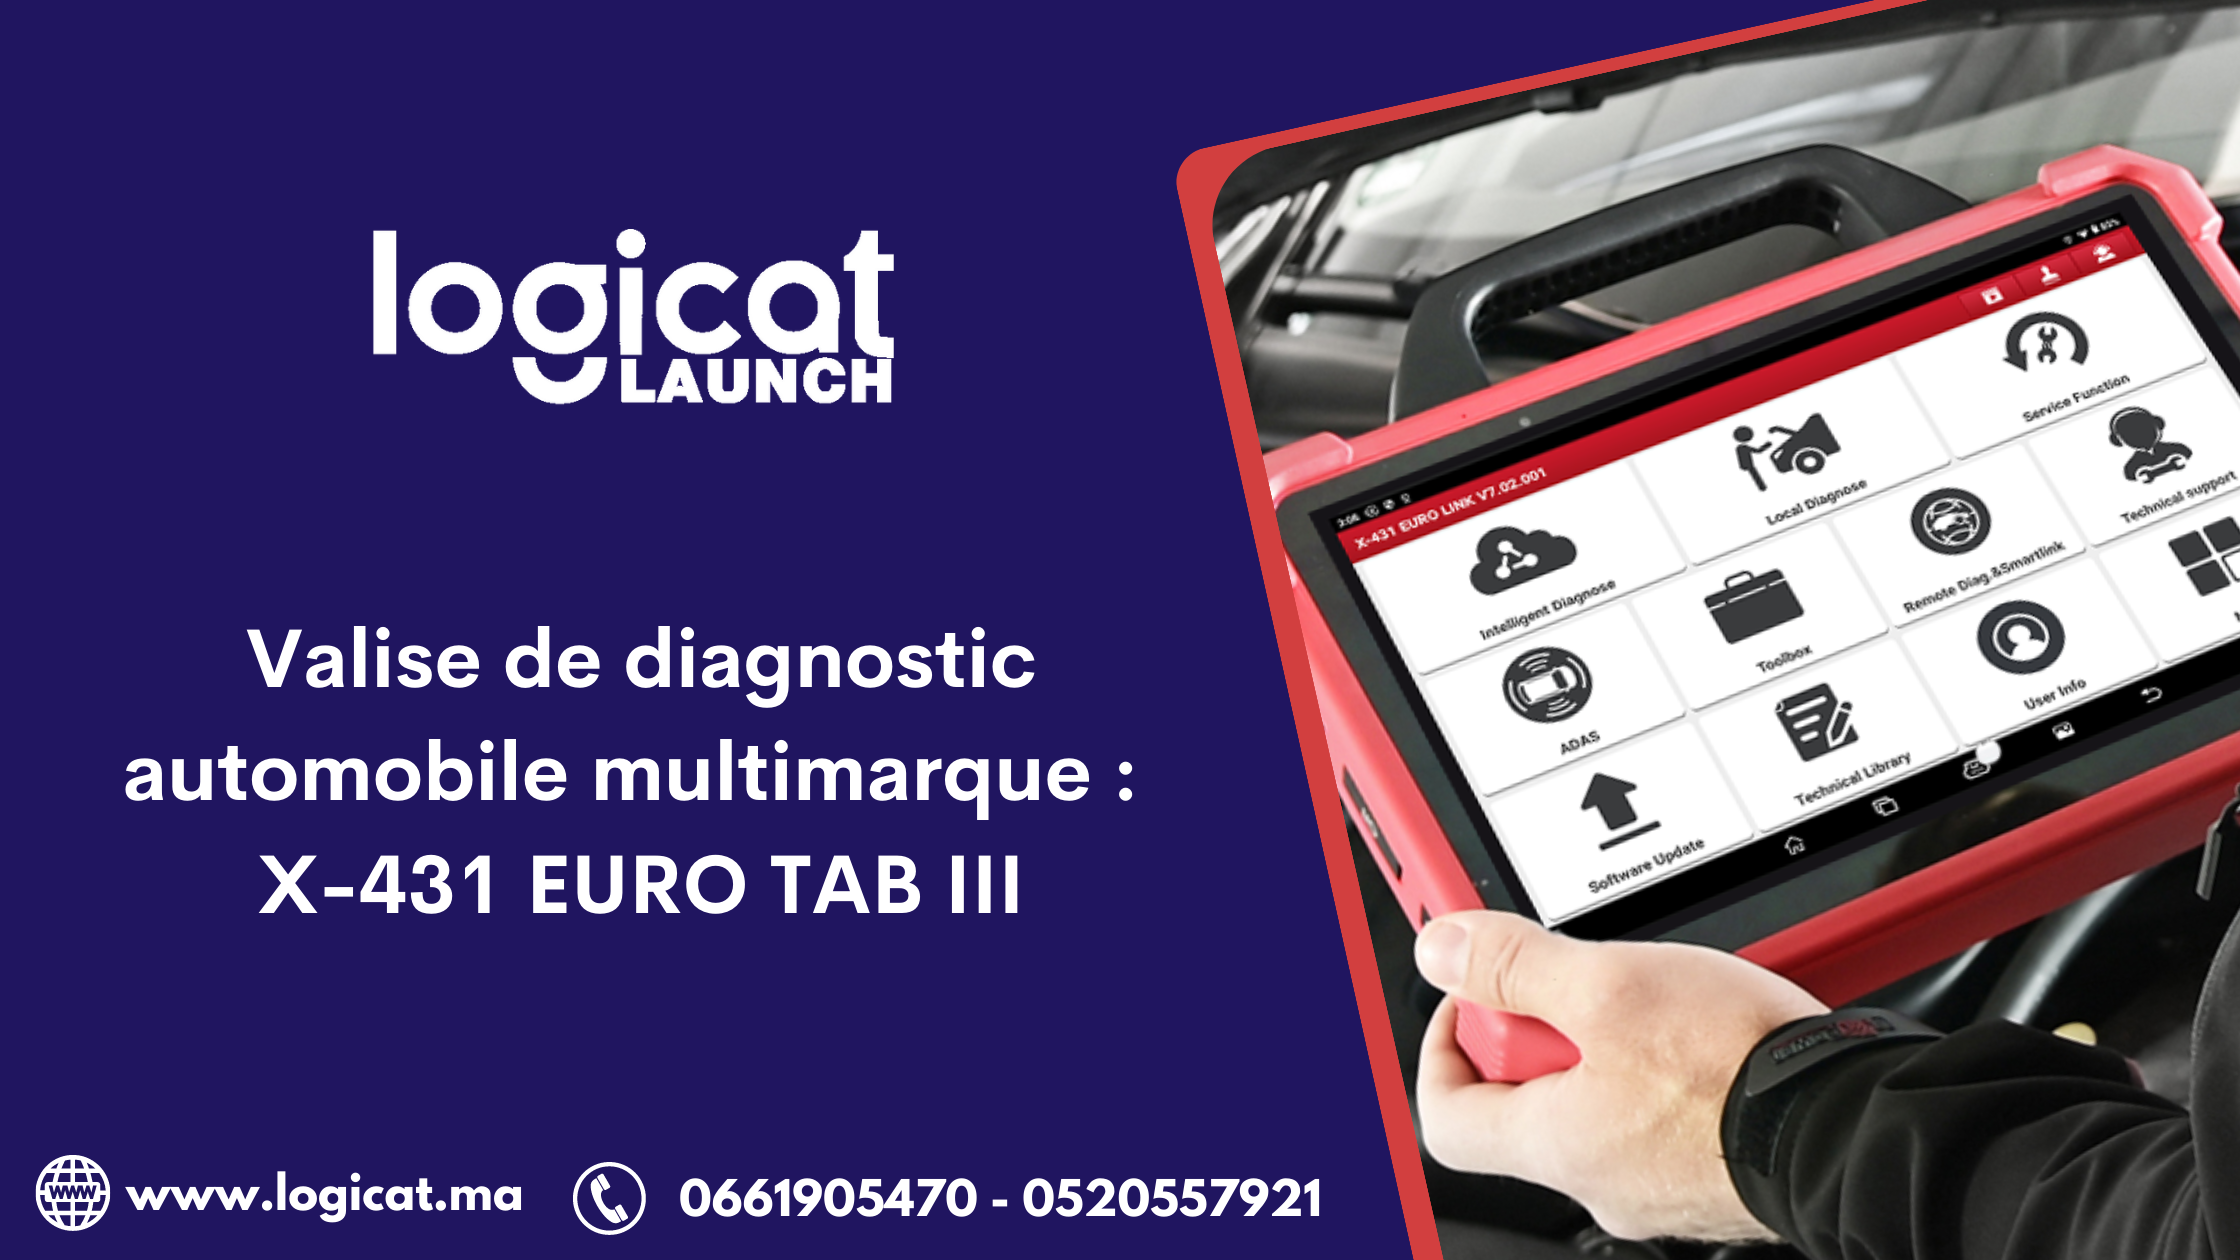 Valise de diagnostic multimarque - Logicat Launch Maroc